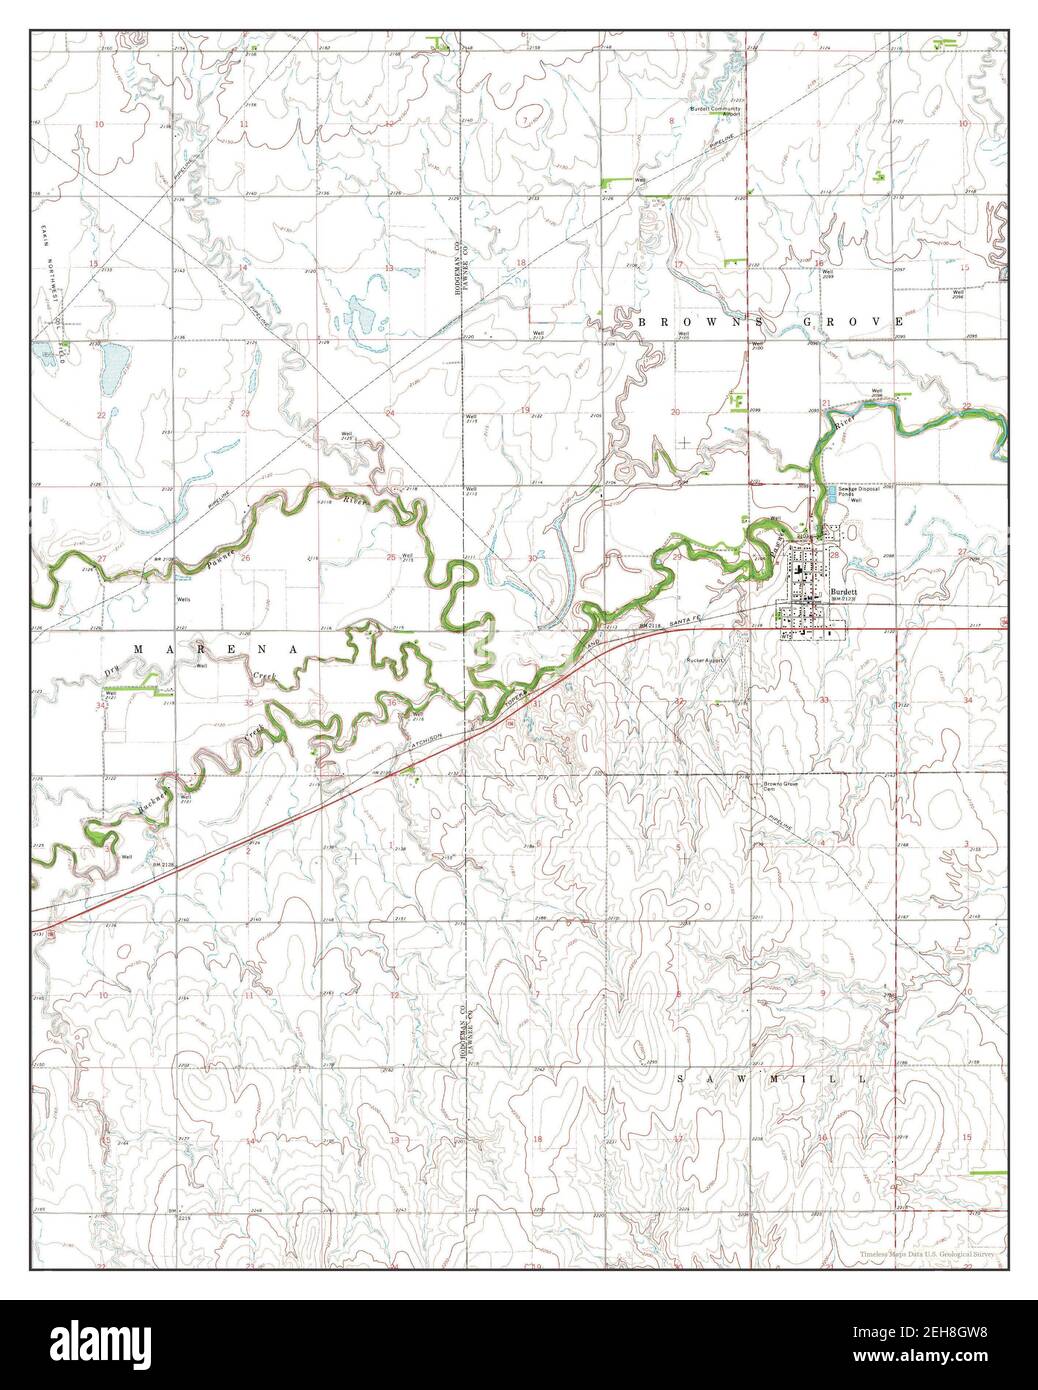 Burdett, Kansas, map 1970, 1:24000, United States of America by Timeless Maps, data U.S. Geological Survey Stock Photo